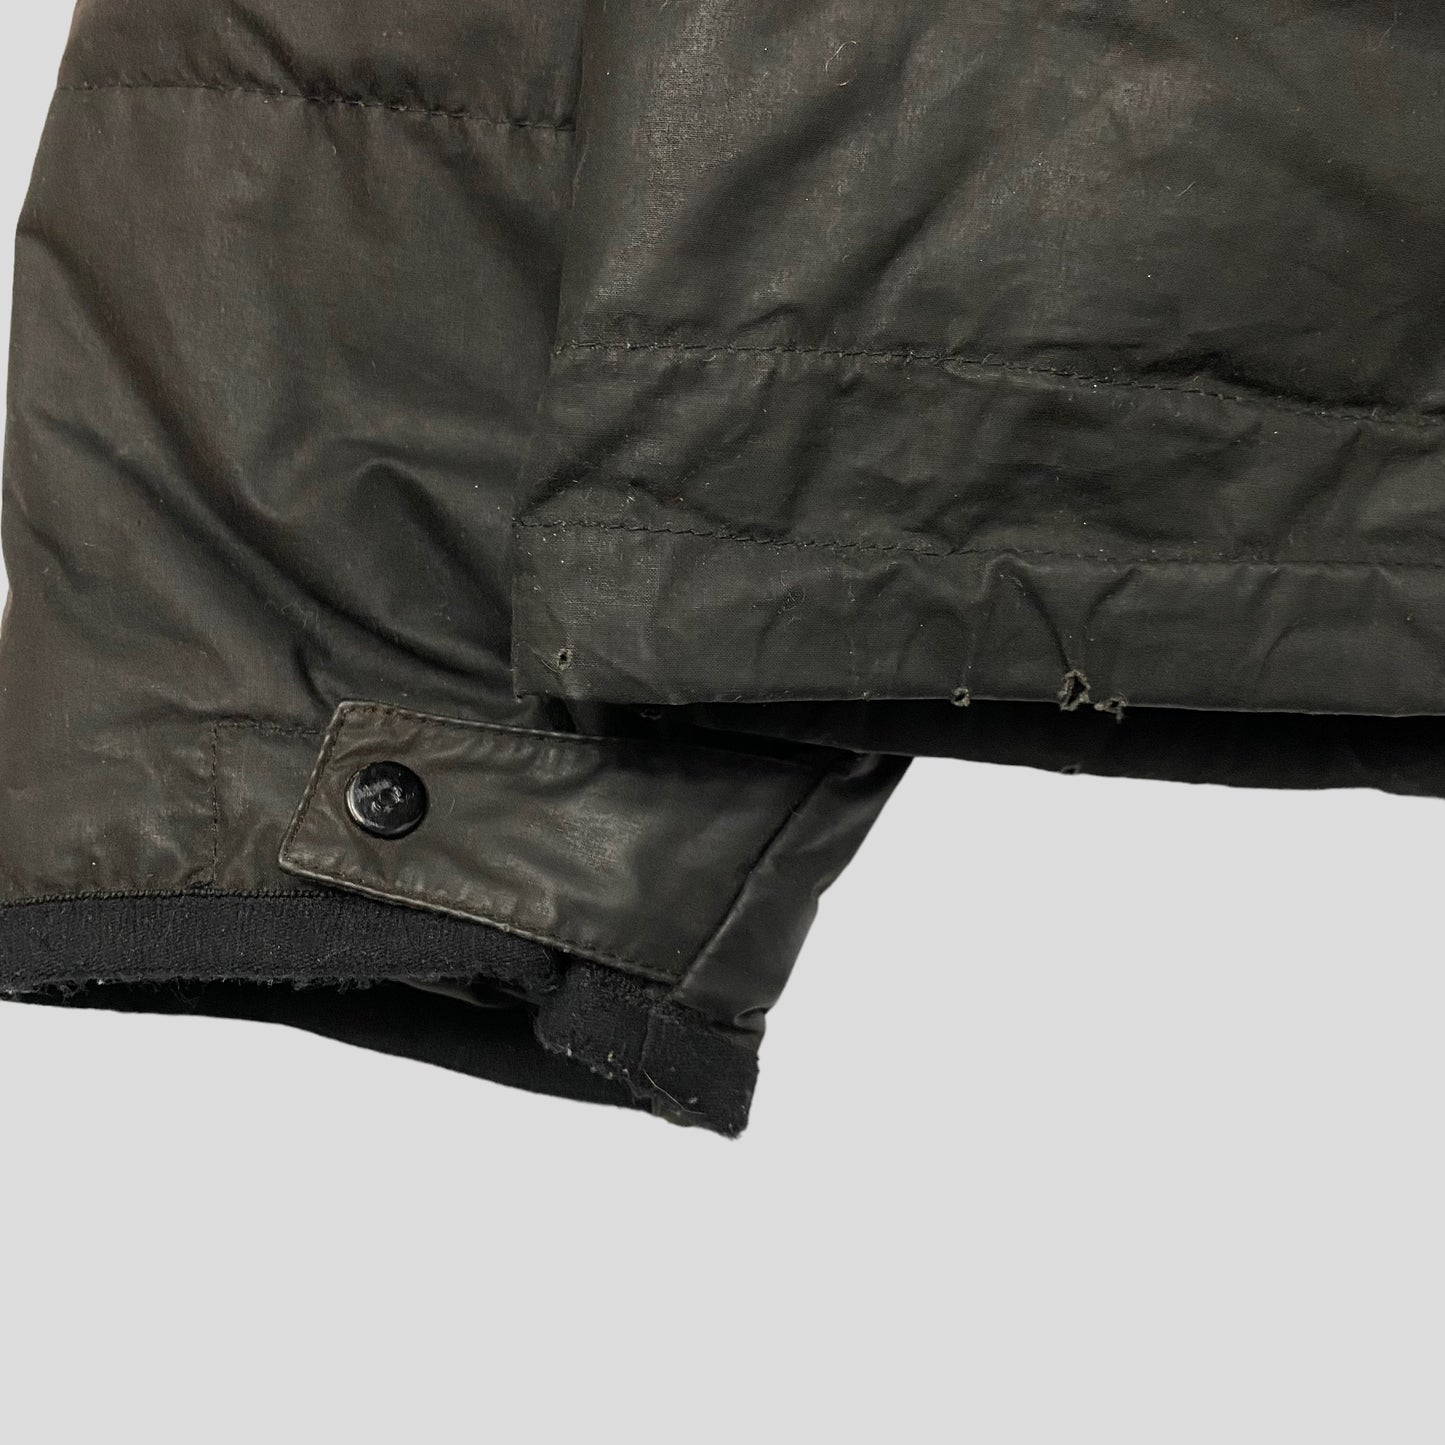 Stone Island AW99 Waxed Cotton Asymmetrical Puffer Jacket - S (M)